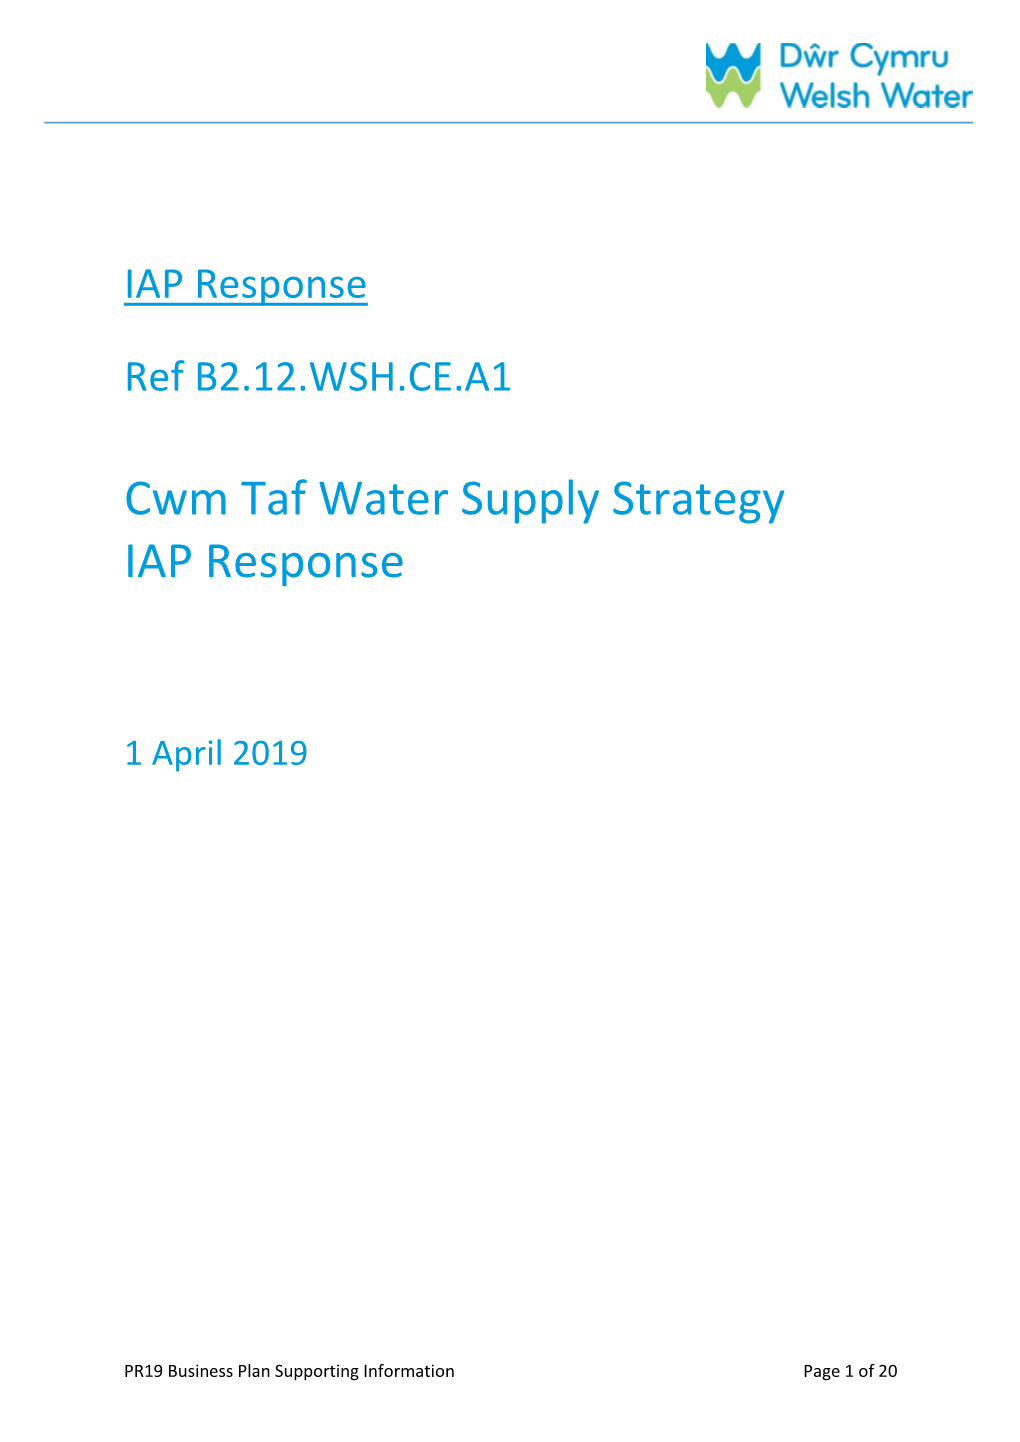 Cwm Taf Water Supply Strategy IAP Response